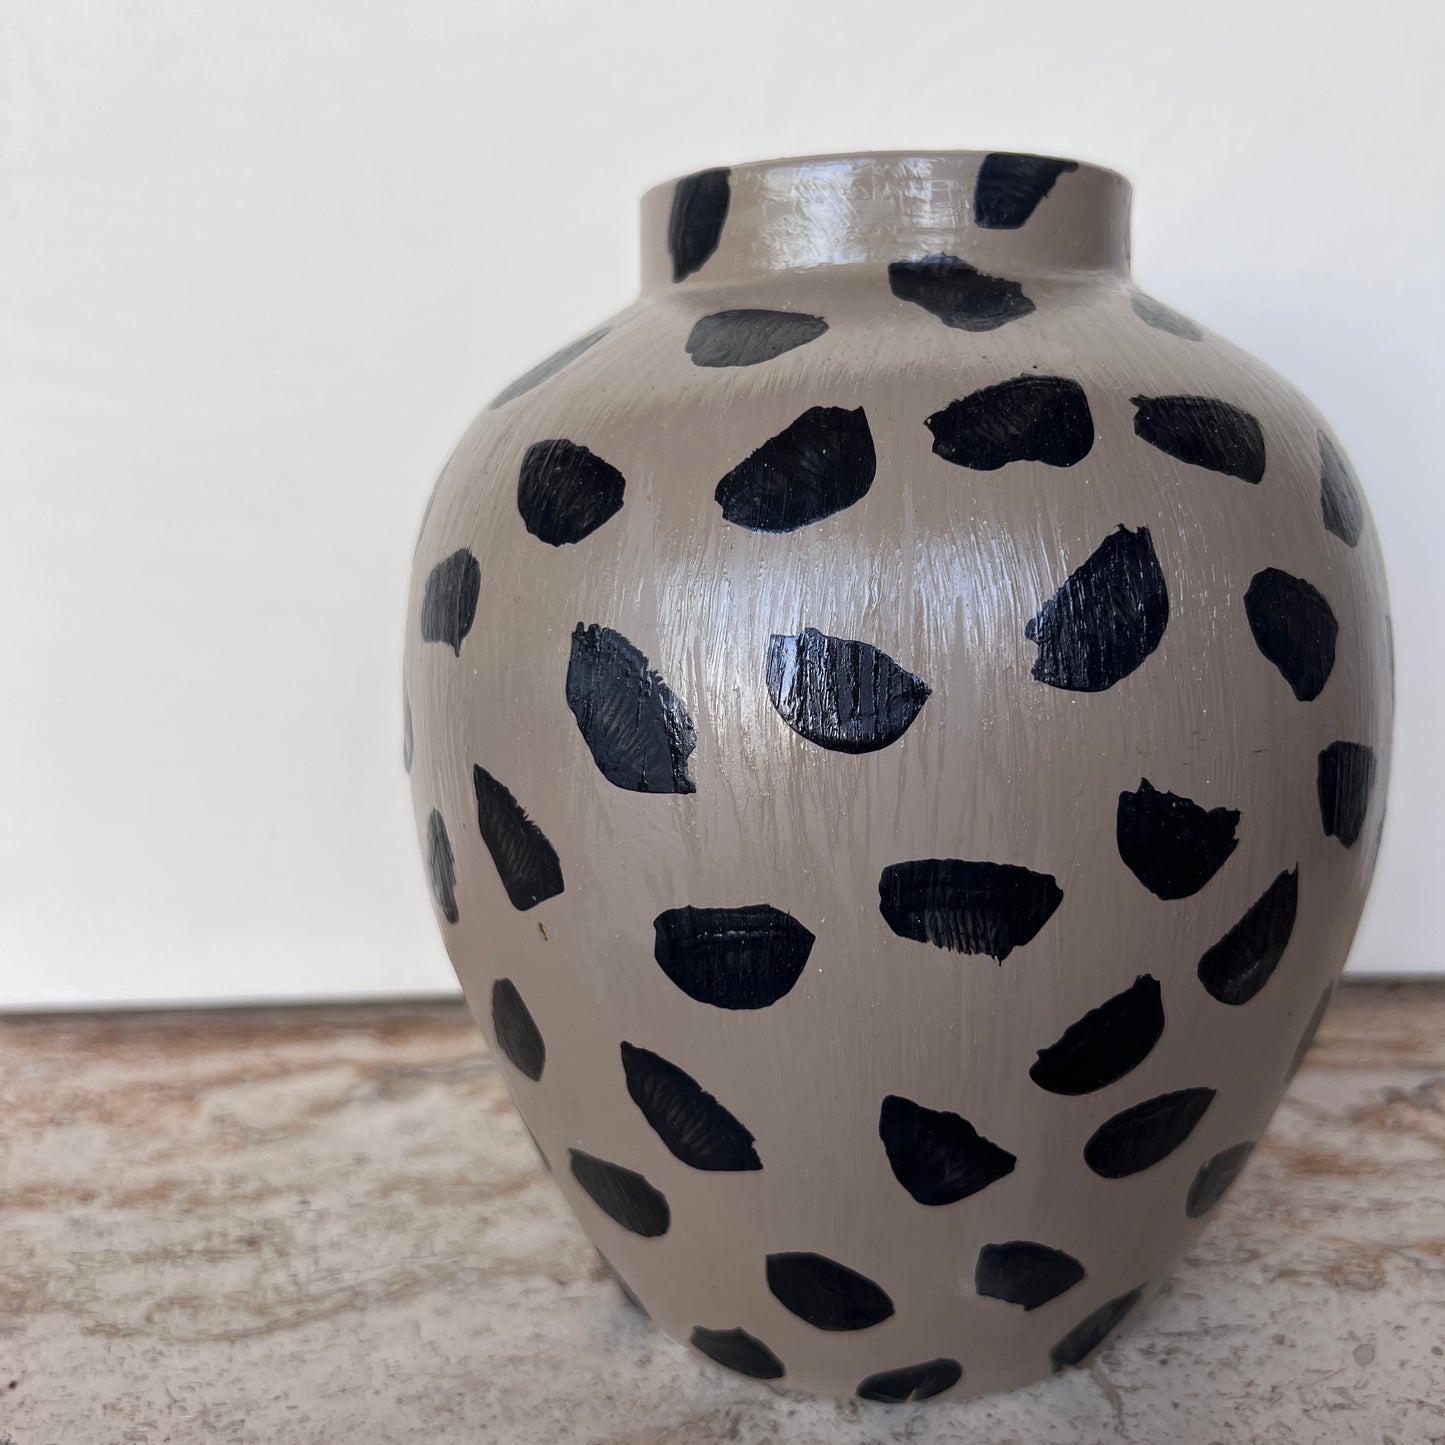 Leopard Vase